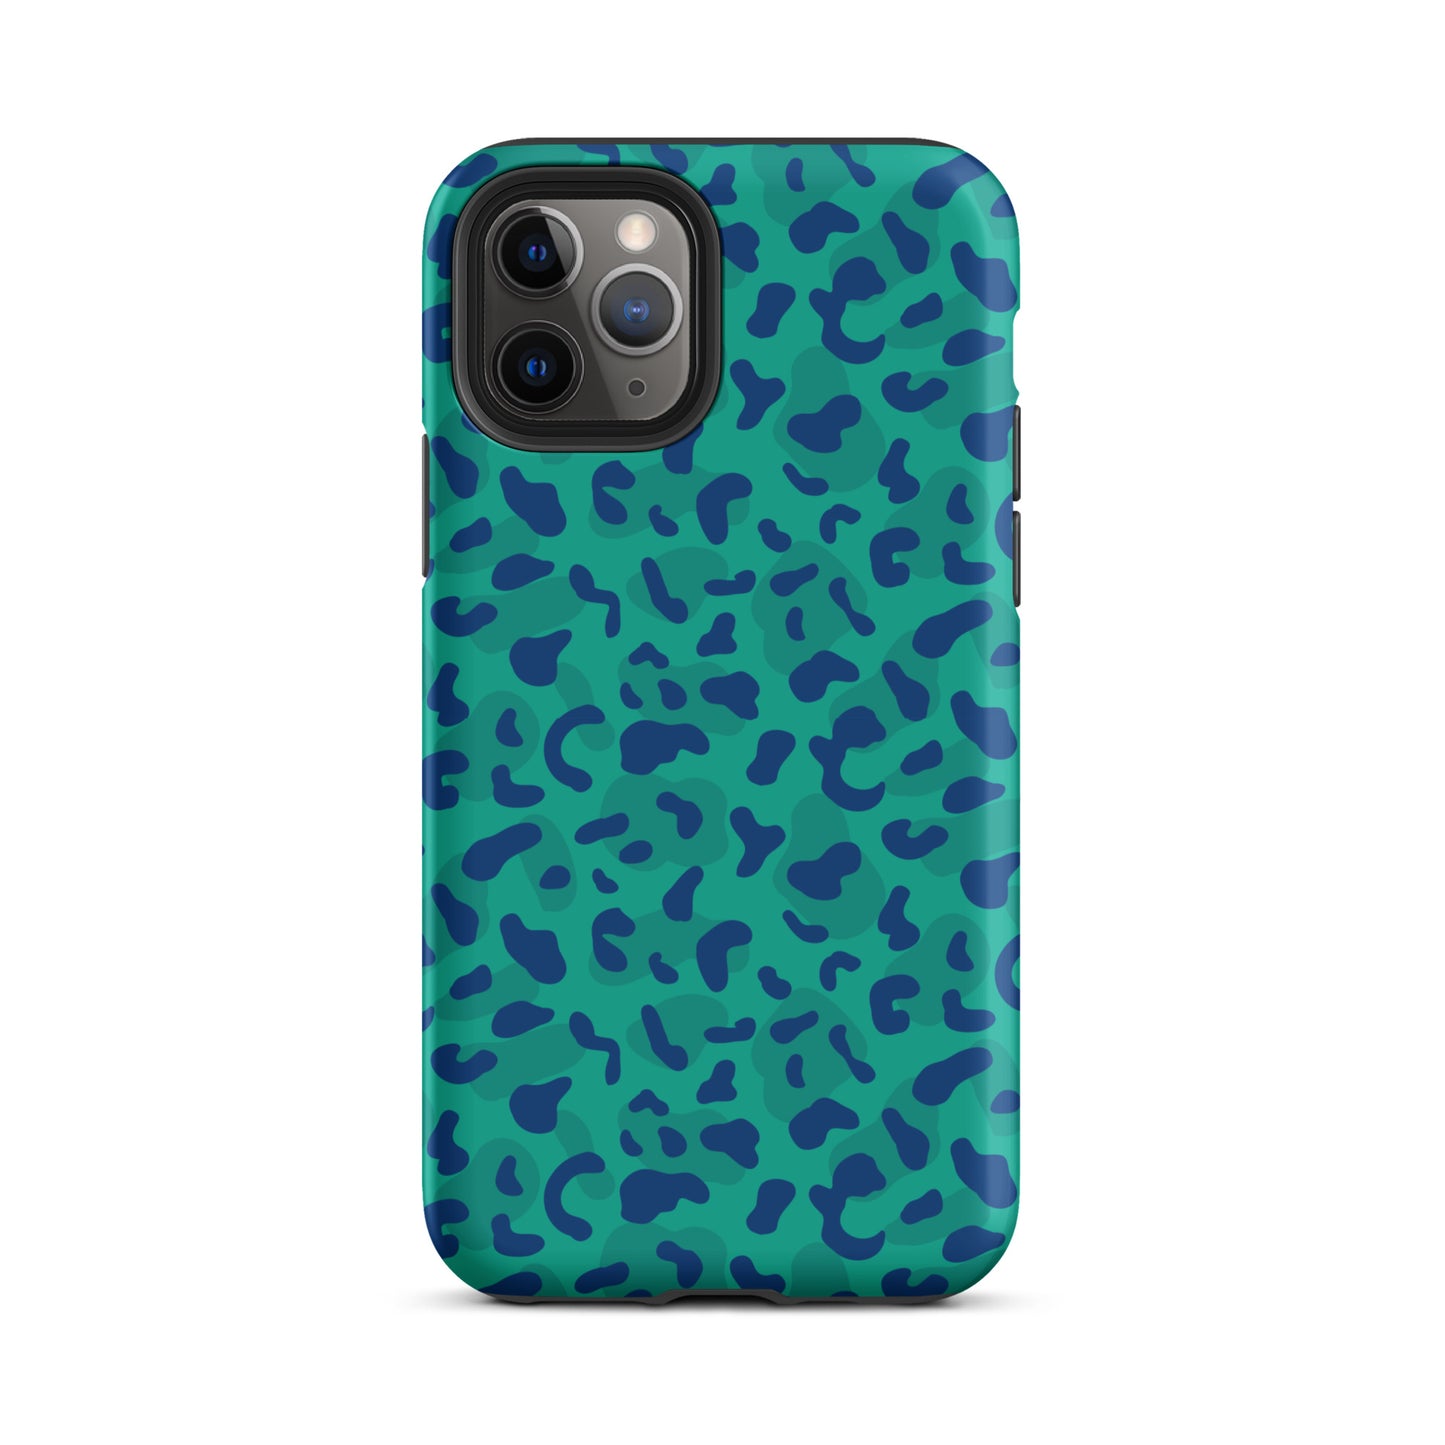 Fancy Leopard Case for iPhone®